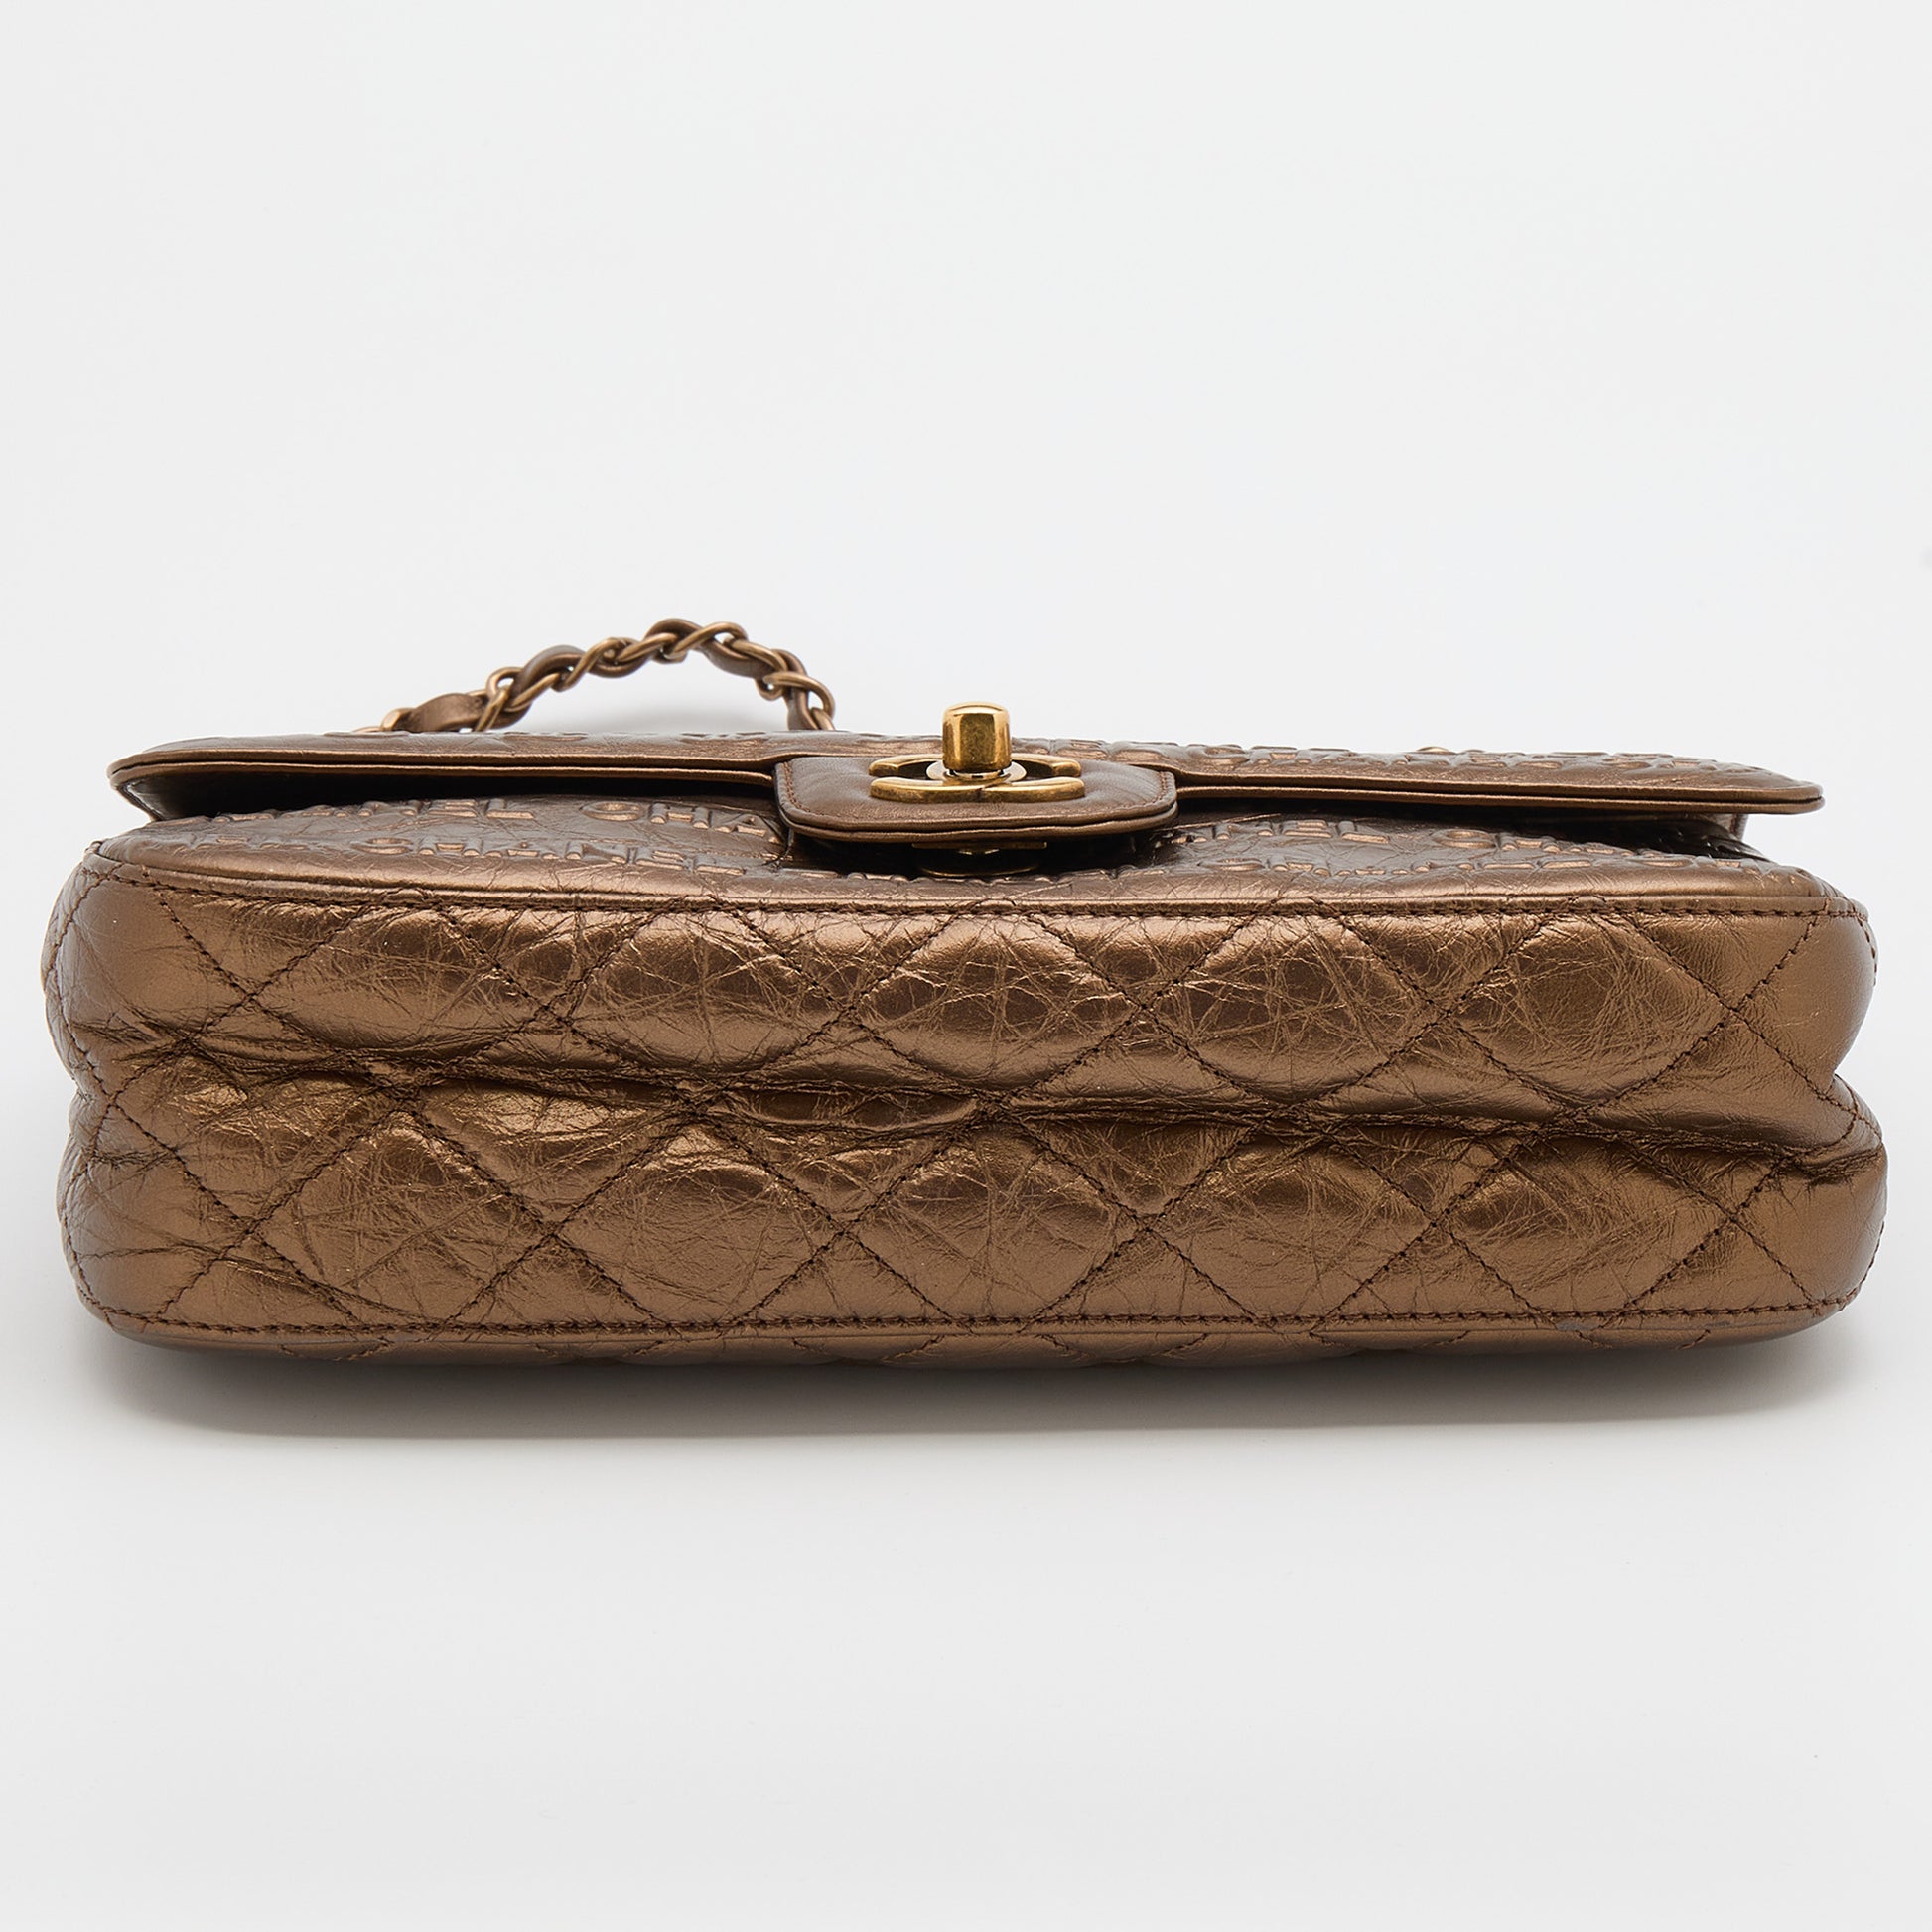 Chanel Metallic Bronze Leather Logo Embossed Flap Bag